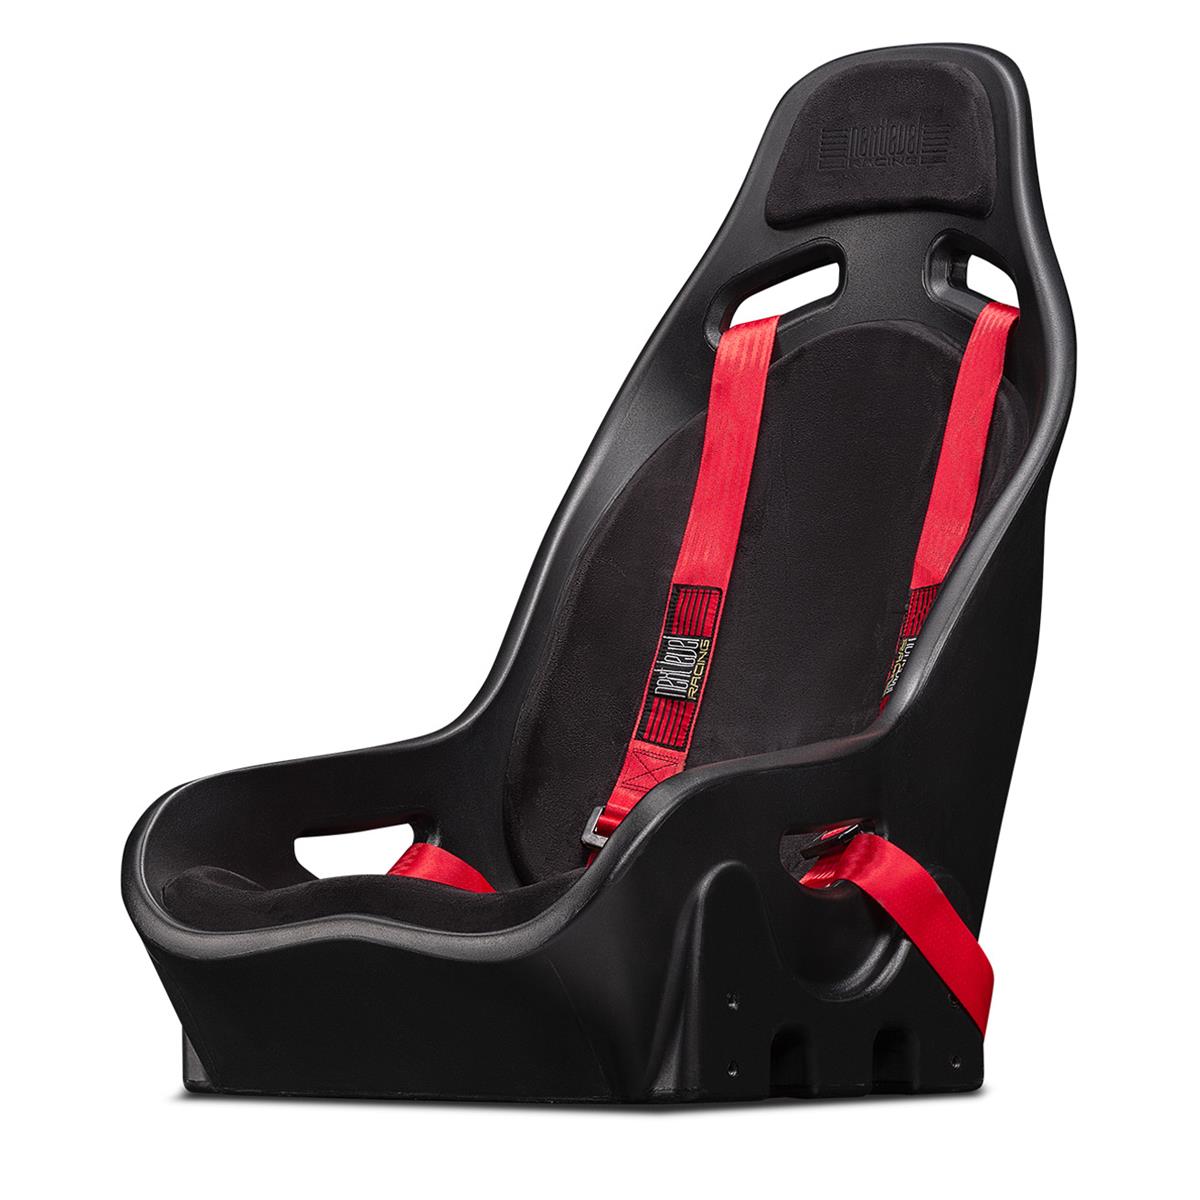 Image of Next Level Racing Elite ES1 Simulator Racing Seat